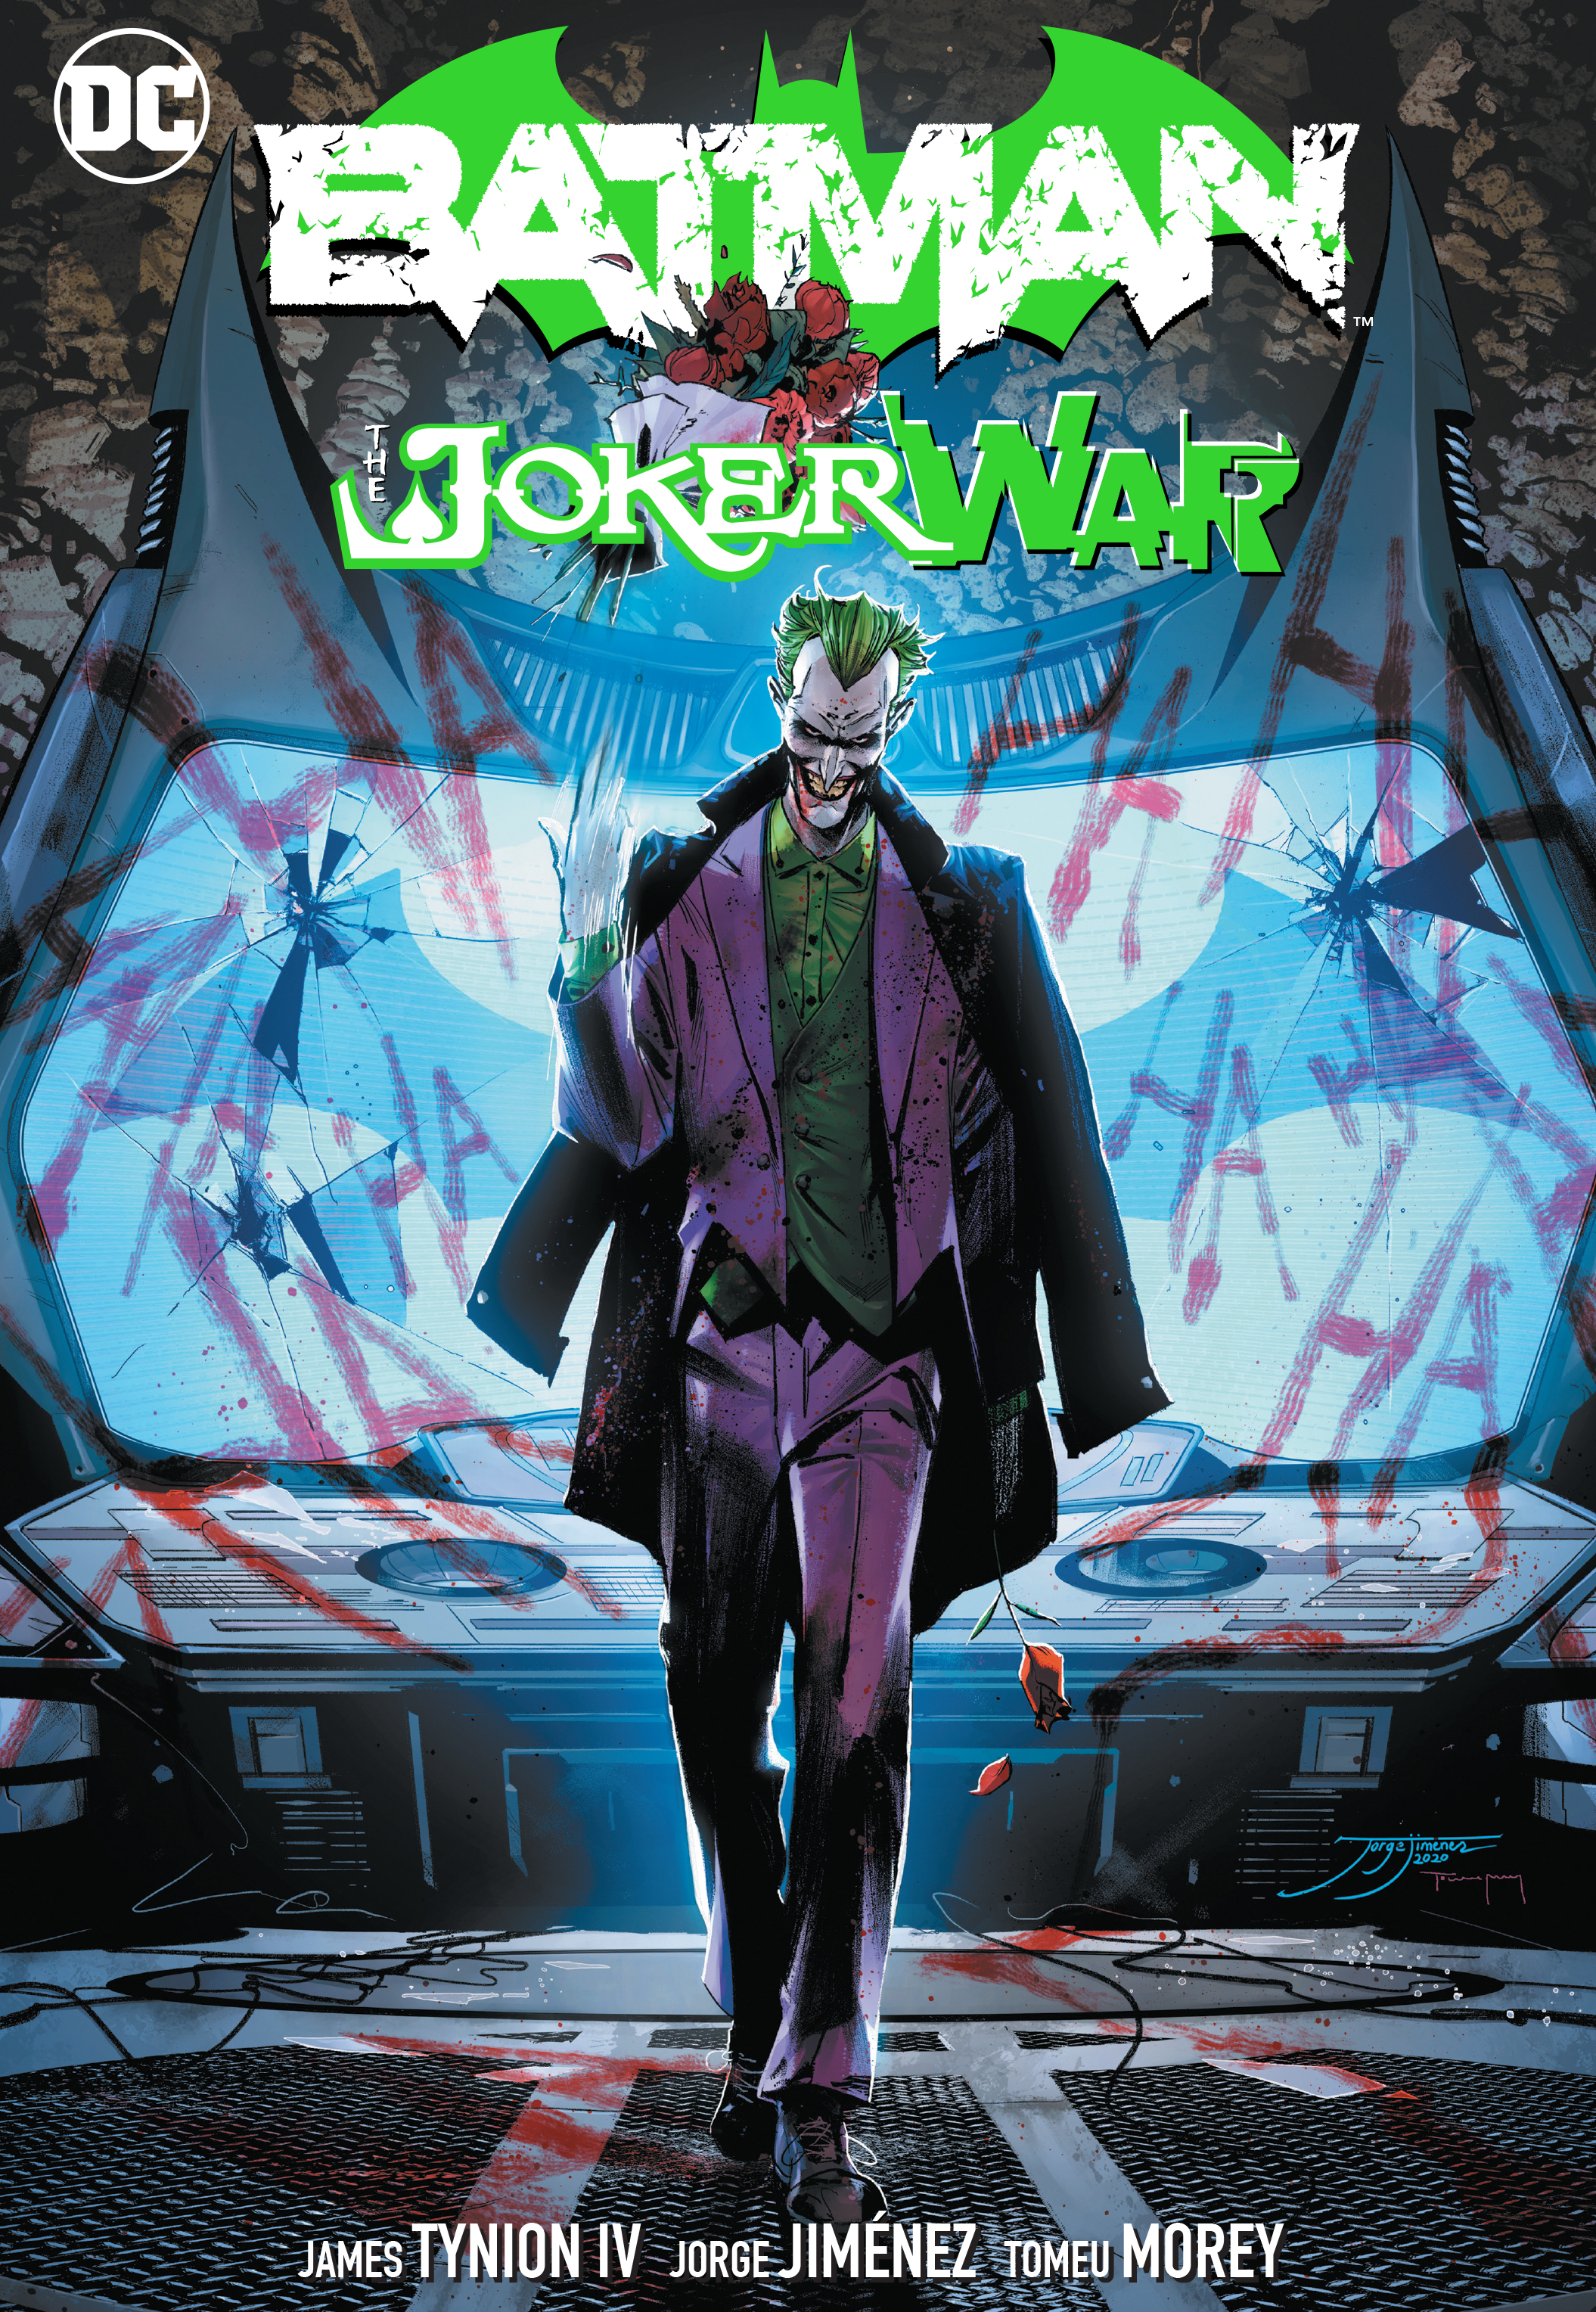 Batman Hardcover Volume 2 the Joker War